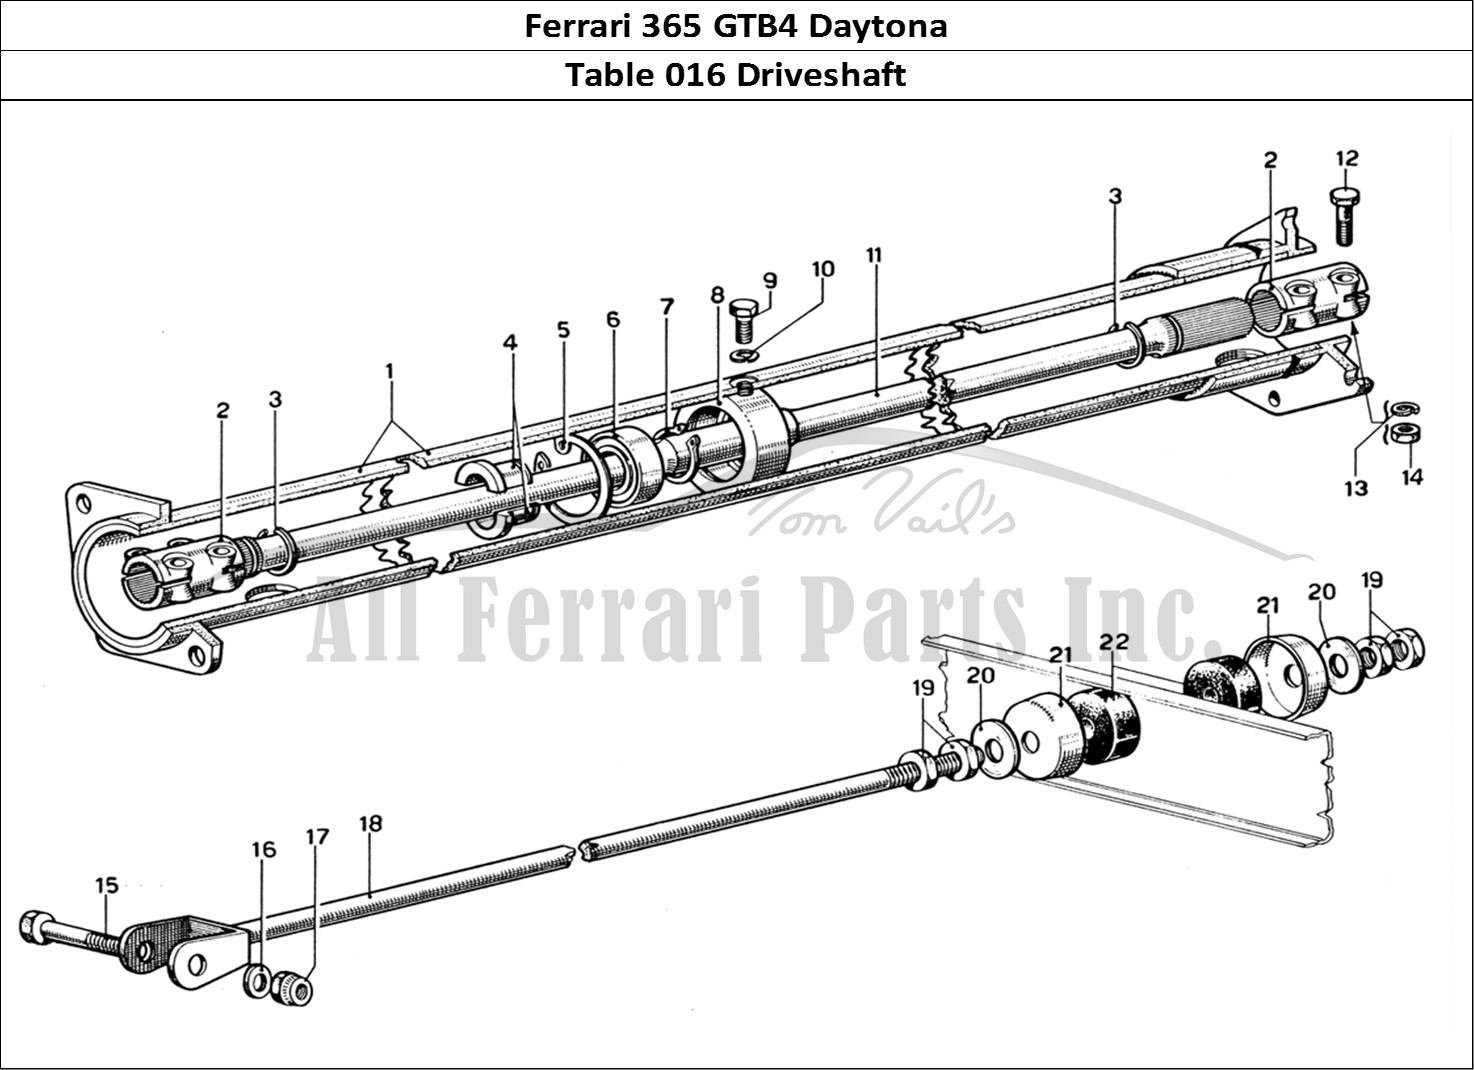 Ferrari Parts Ferrari 365 GTB4 Daytona (1969) Page 016 Transmission Shaft